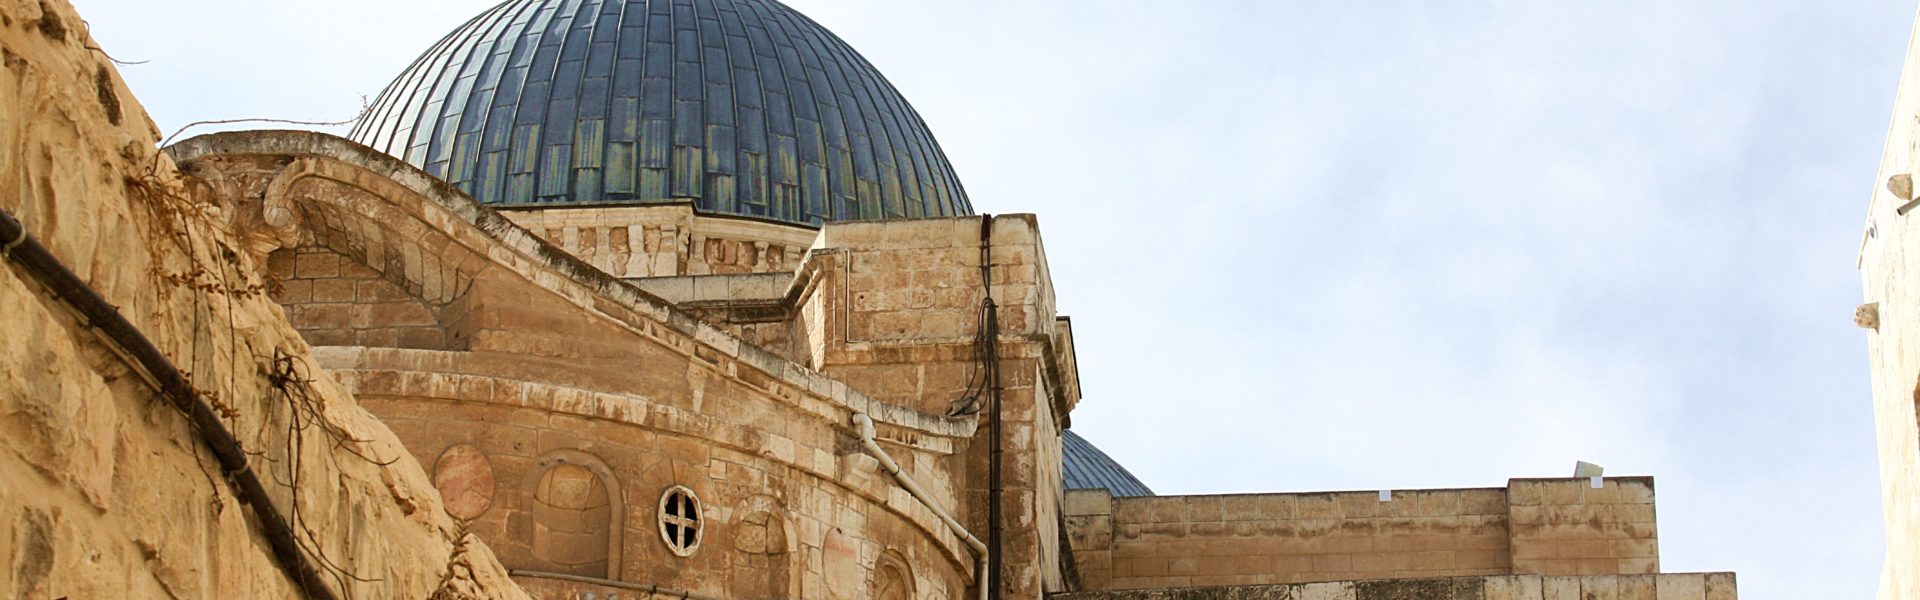 Our Top Ten Favorite Destinations Bucket List #10: Israel